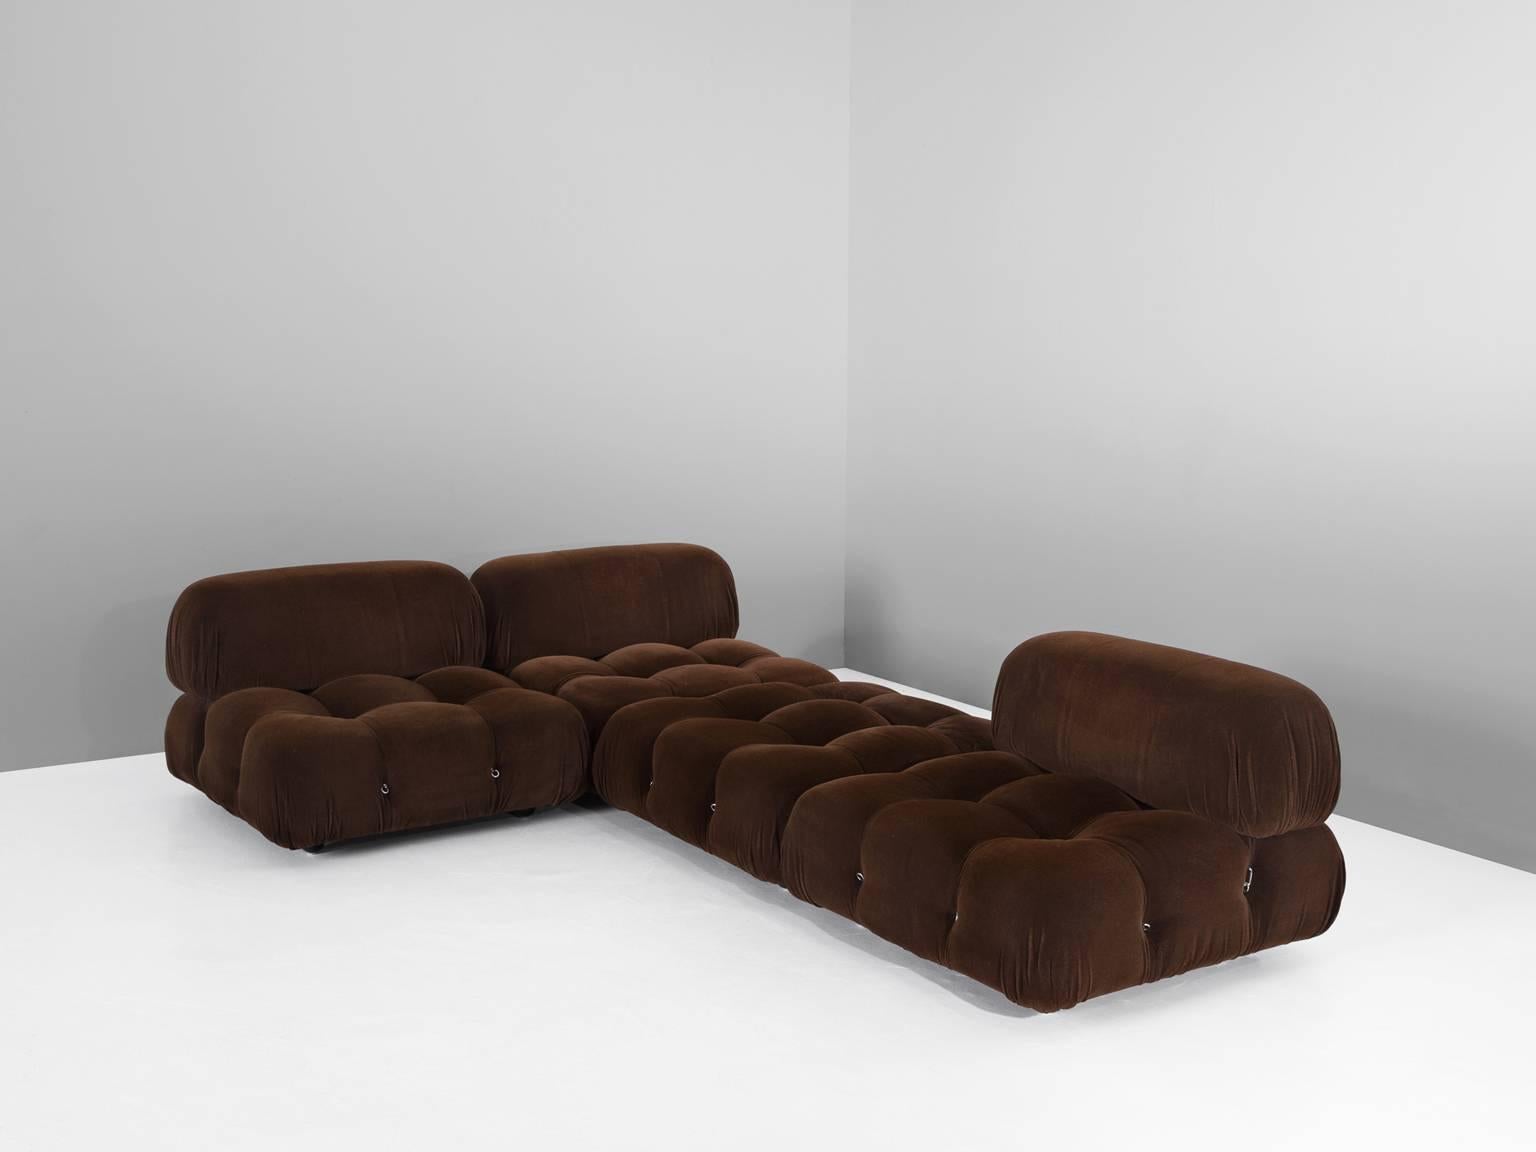 Italian Mario Bellini 'Camaleonda' Modular Sofa in Original Brown Upholstery